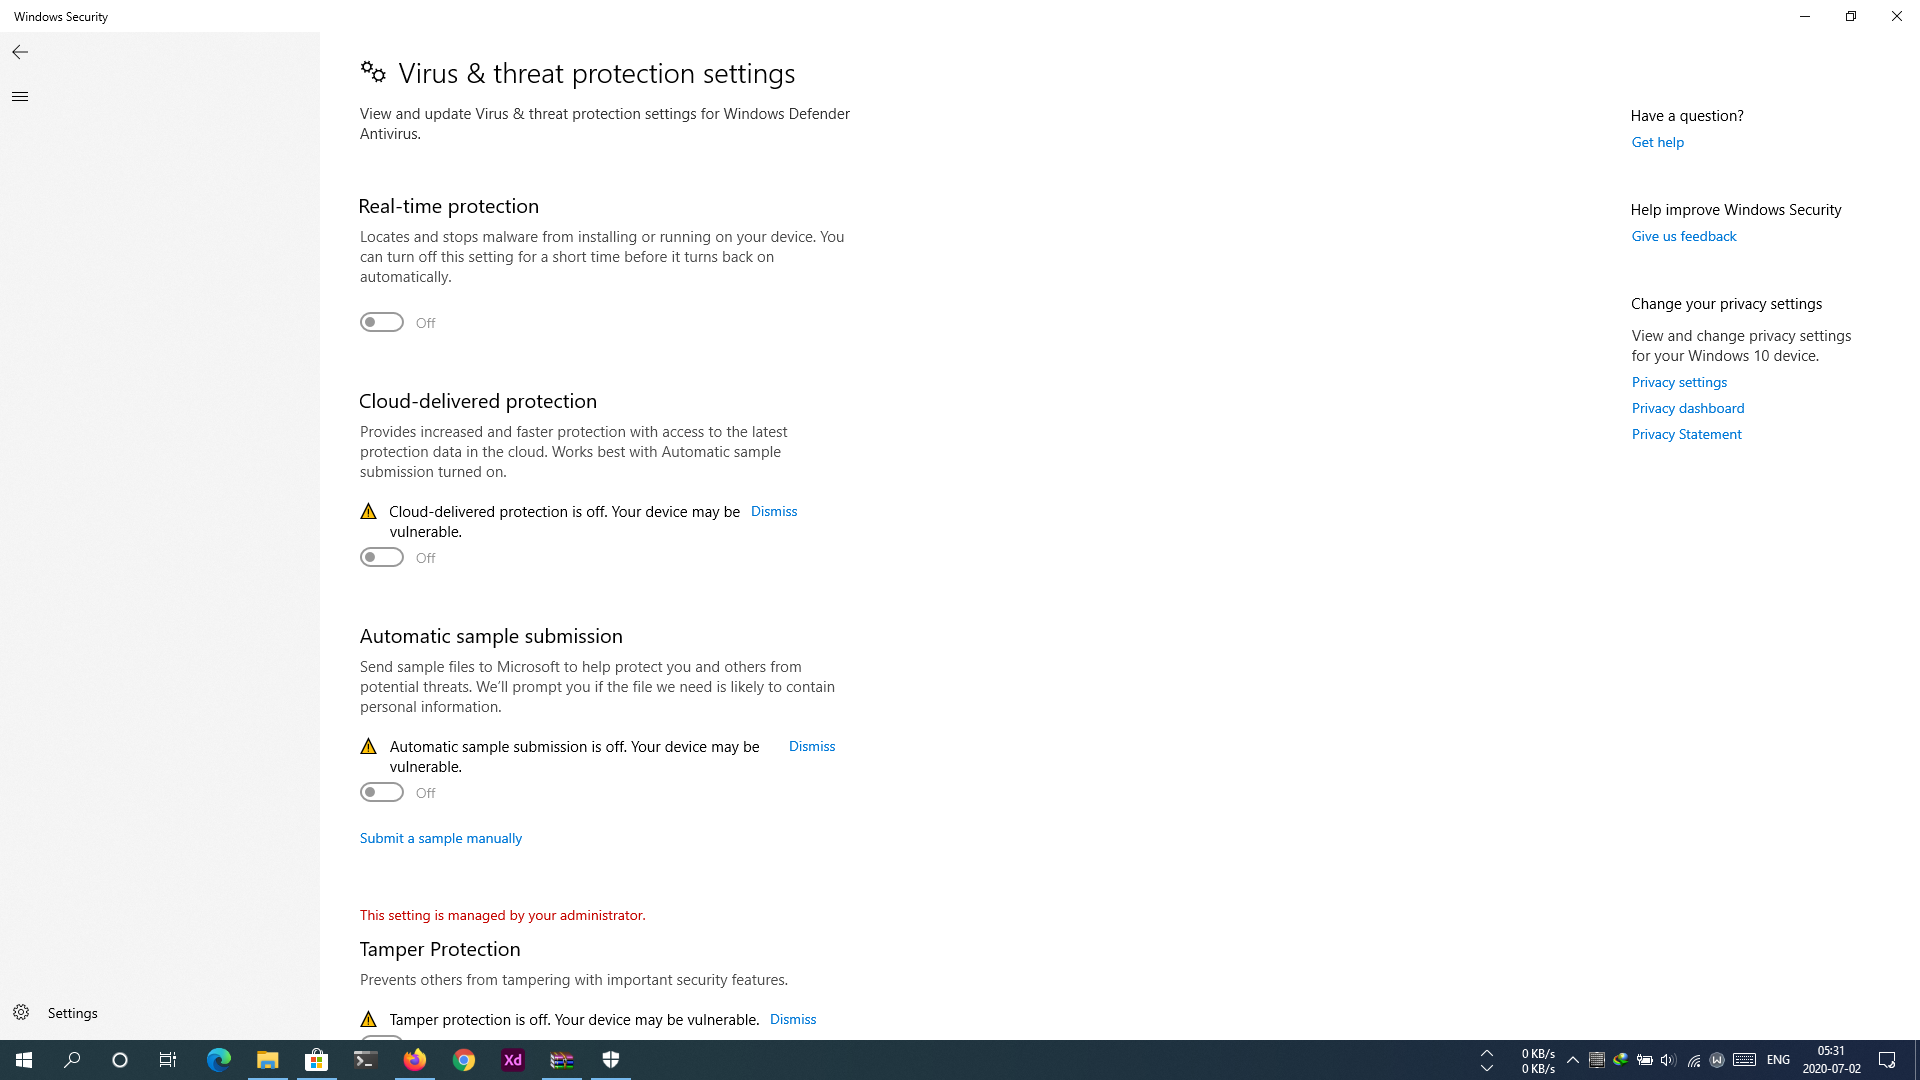 Windows defender not working 83d80508-8d24-4dce-83c4-a0865110798f?upload=true.png